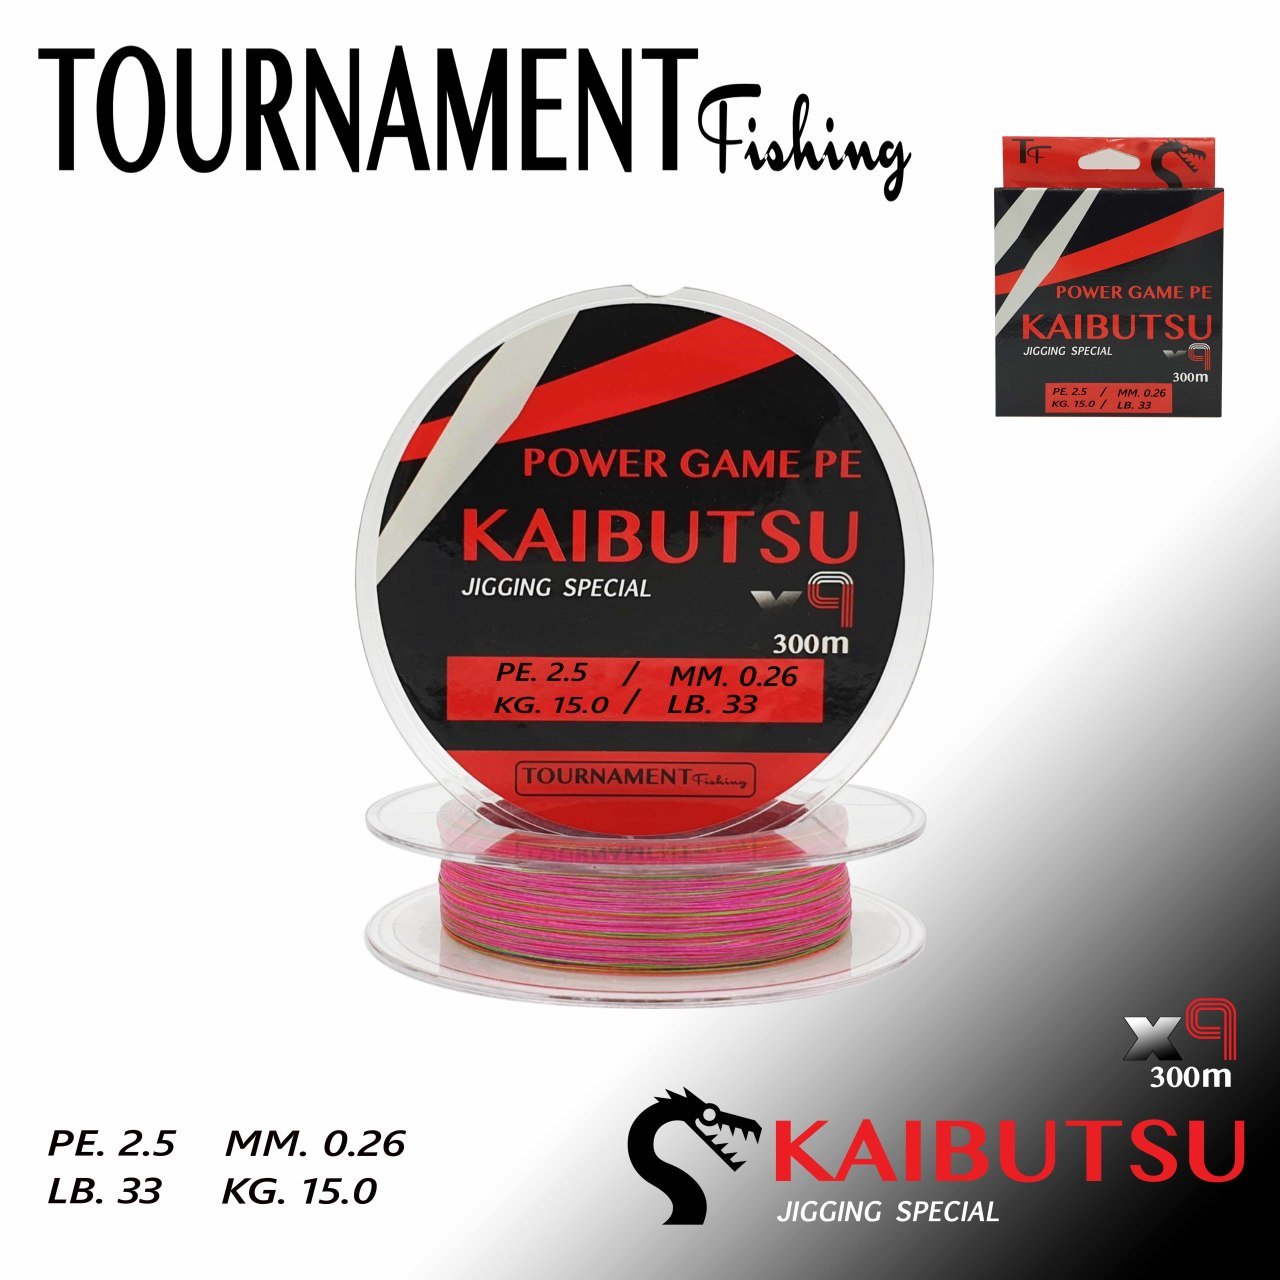 TOURNAMENT fishing Power game pe KAIBUTSU Jigging Special X9 PE. 2.5 /MM0.26 KG15.0/LB.33